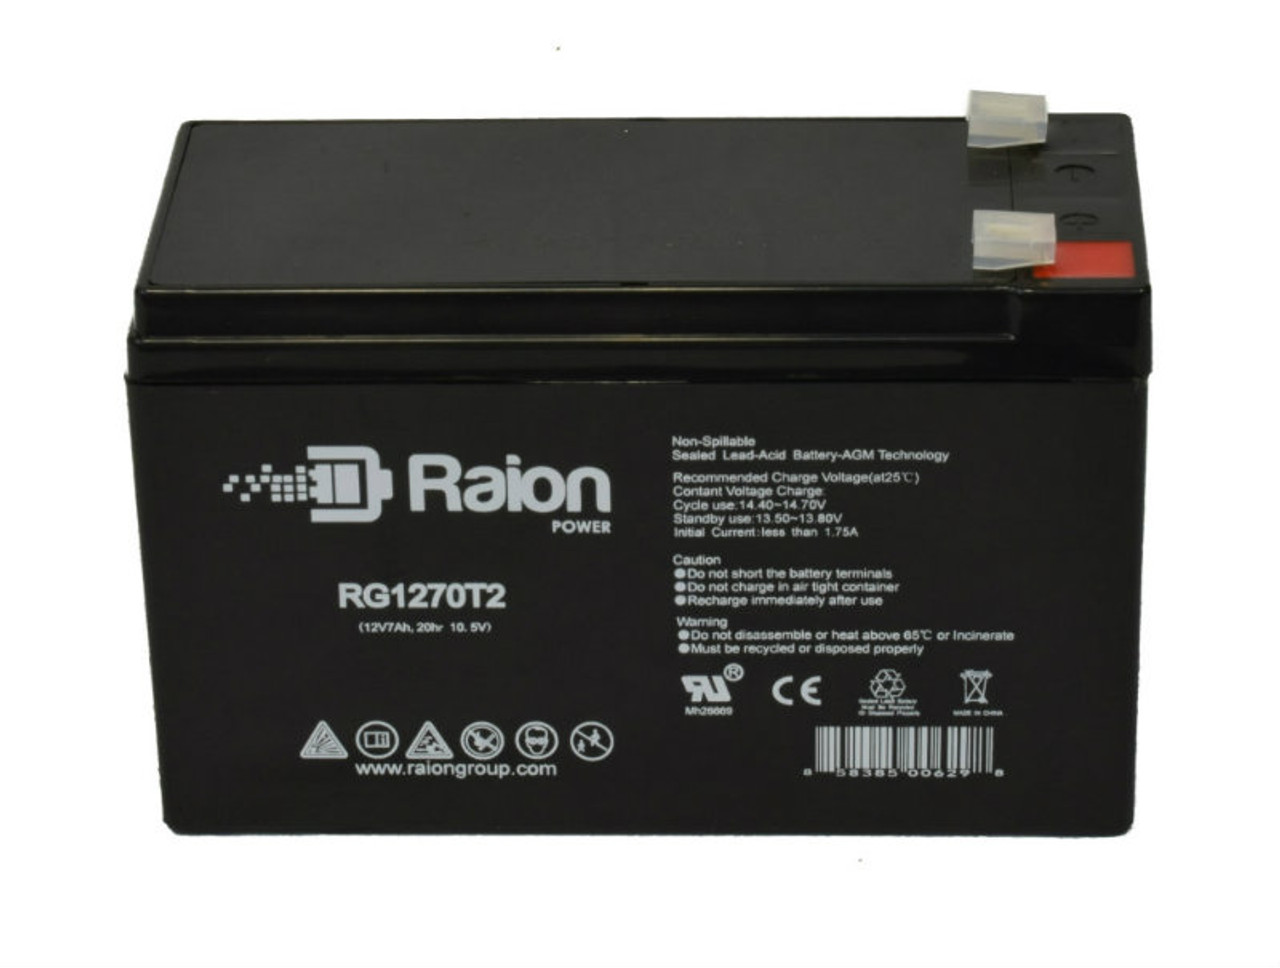 Raion Power RG1270T1 12V 7Ah Lead Acid Battery for Park Medical Electronics Lab 1105 Compressor